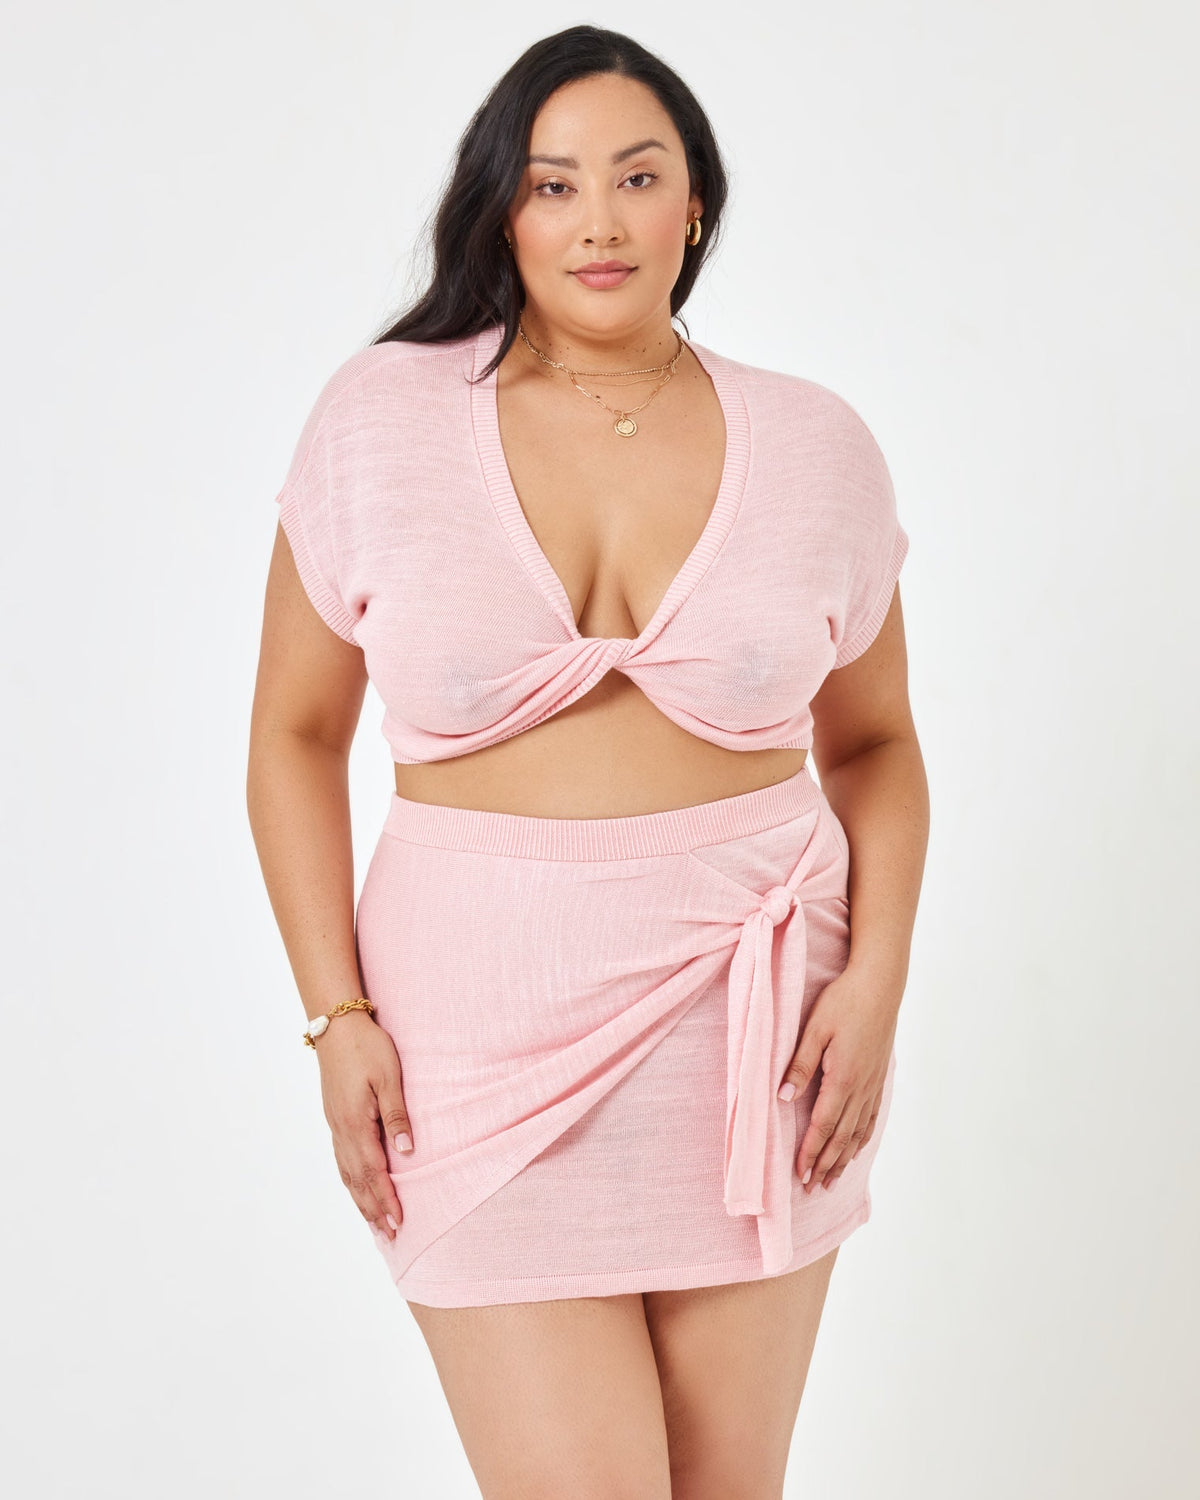 Vagabond Skirt - Blossom Blossom | Model: Bianca (size: XL)